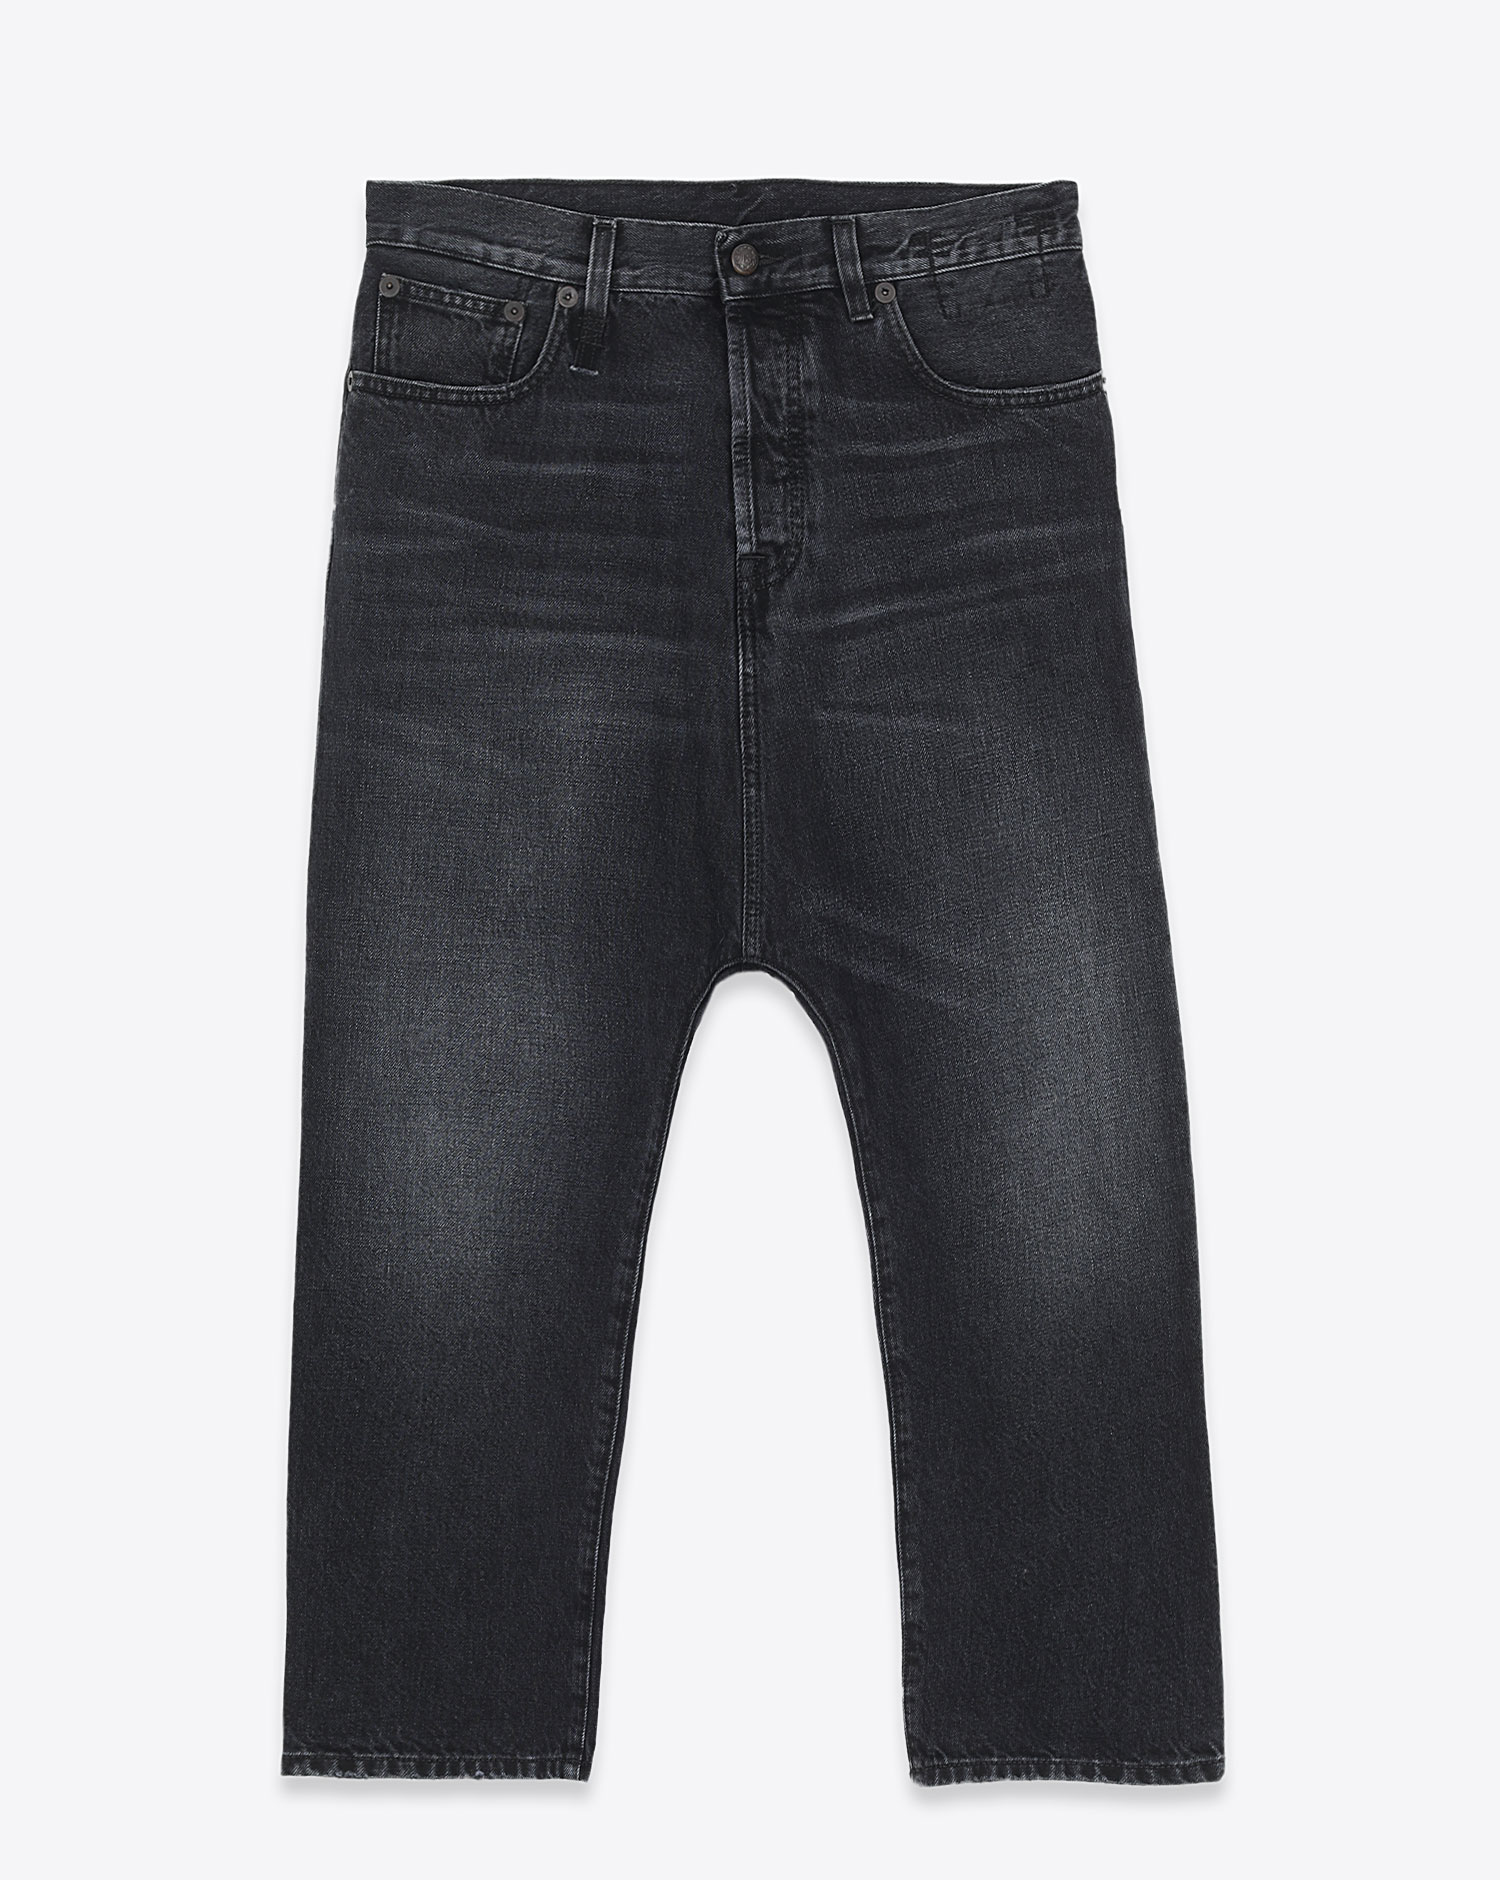 Jeans Tailored Drop R13 Denim en denim noir.  
